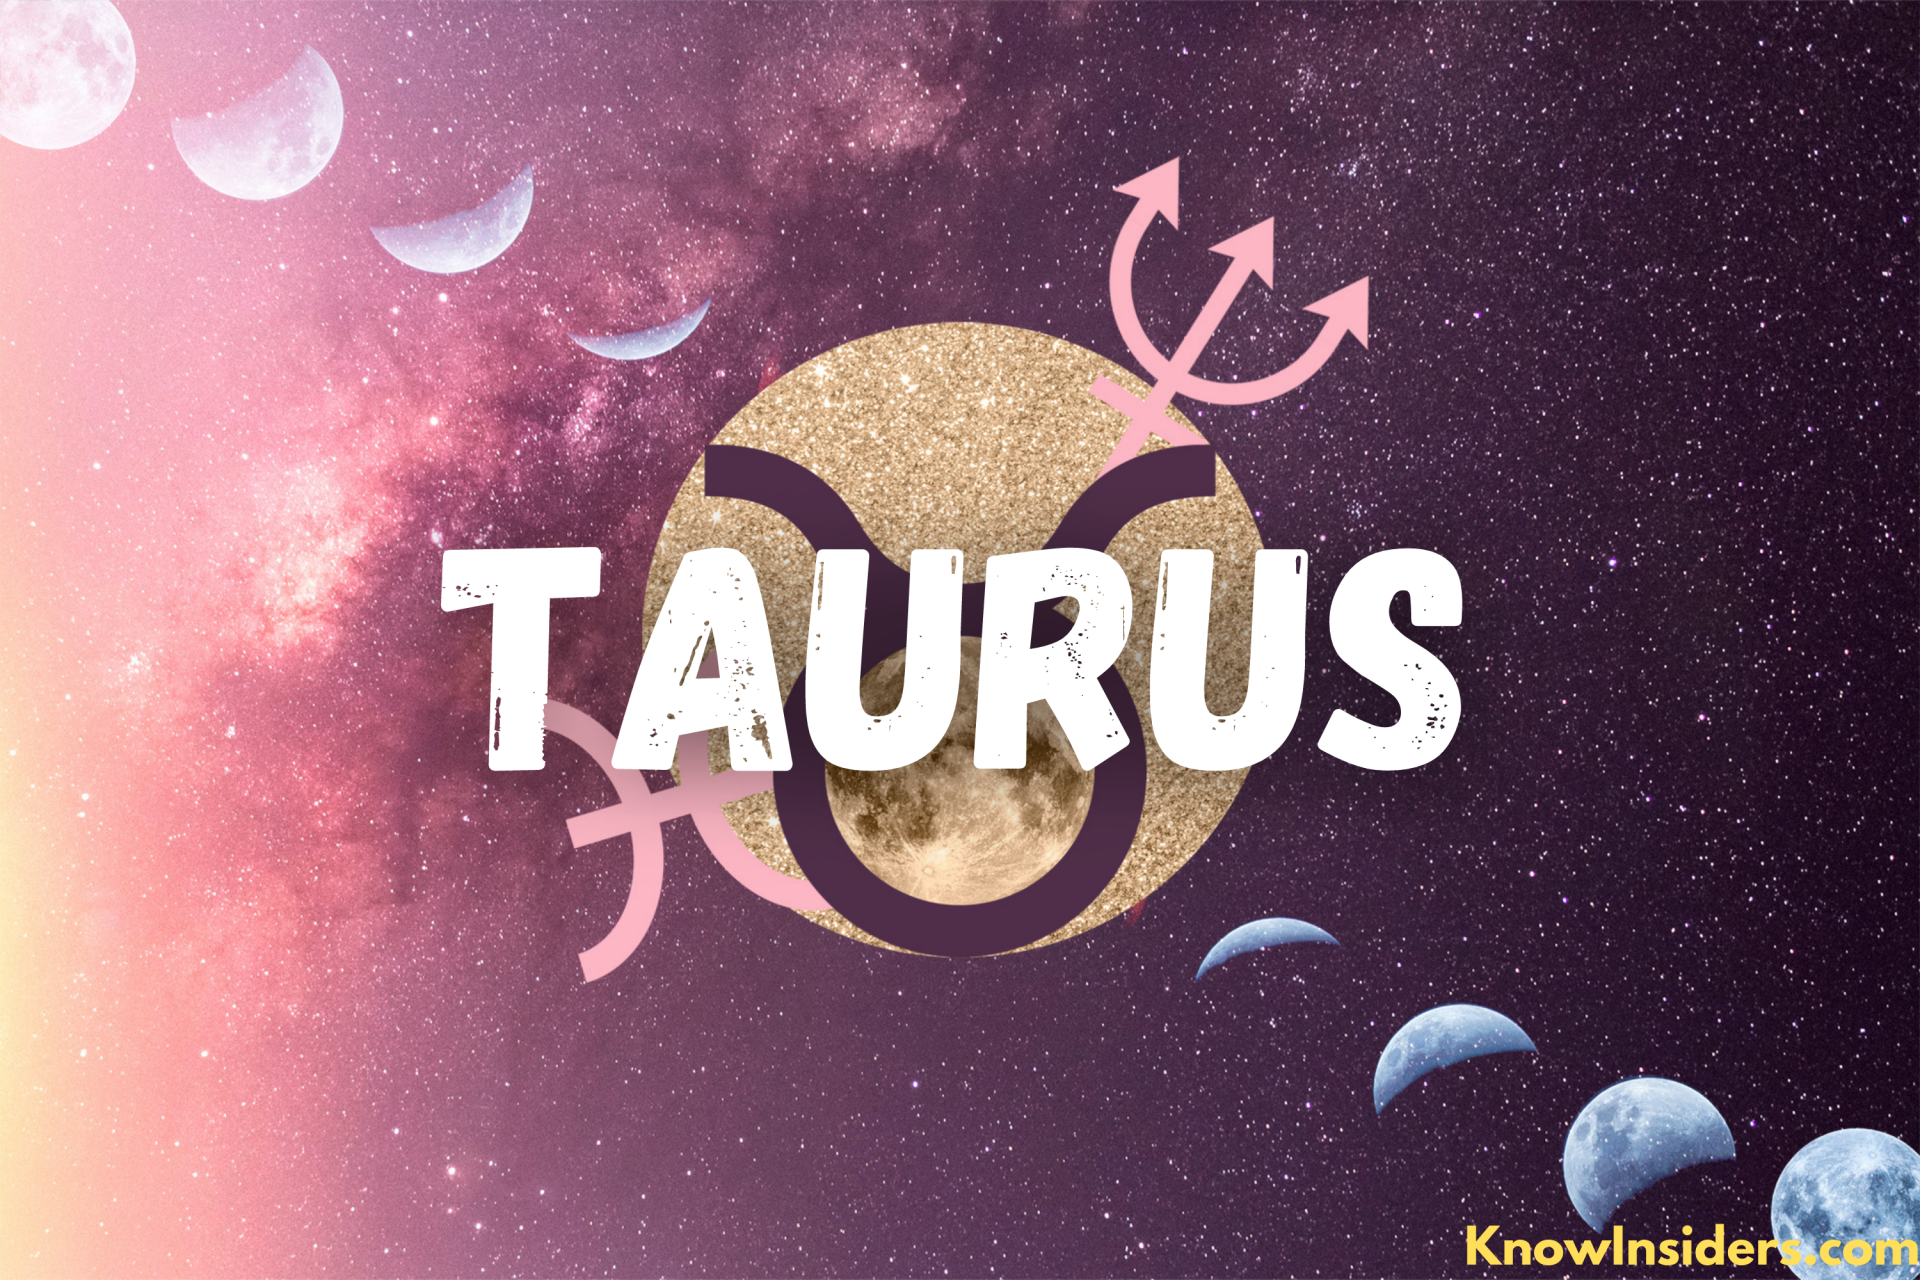 TAURUS Horoscope: Prediction for Money, Financial - All Life